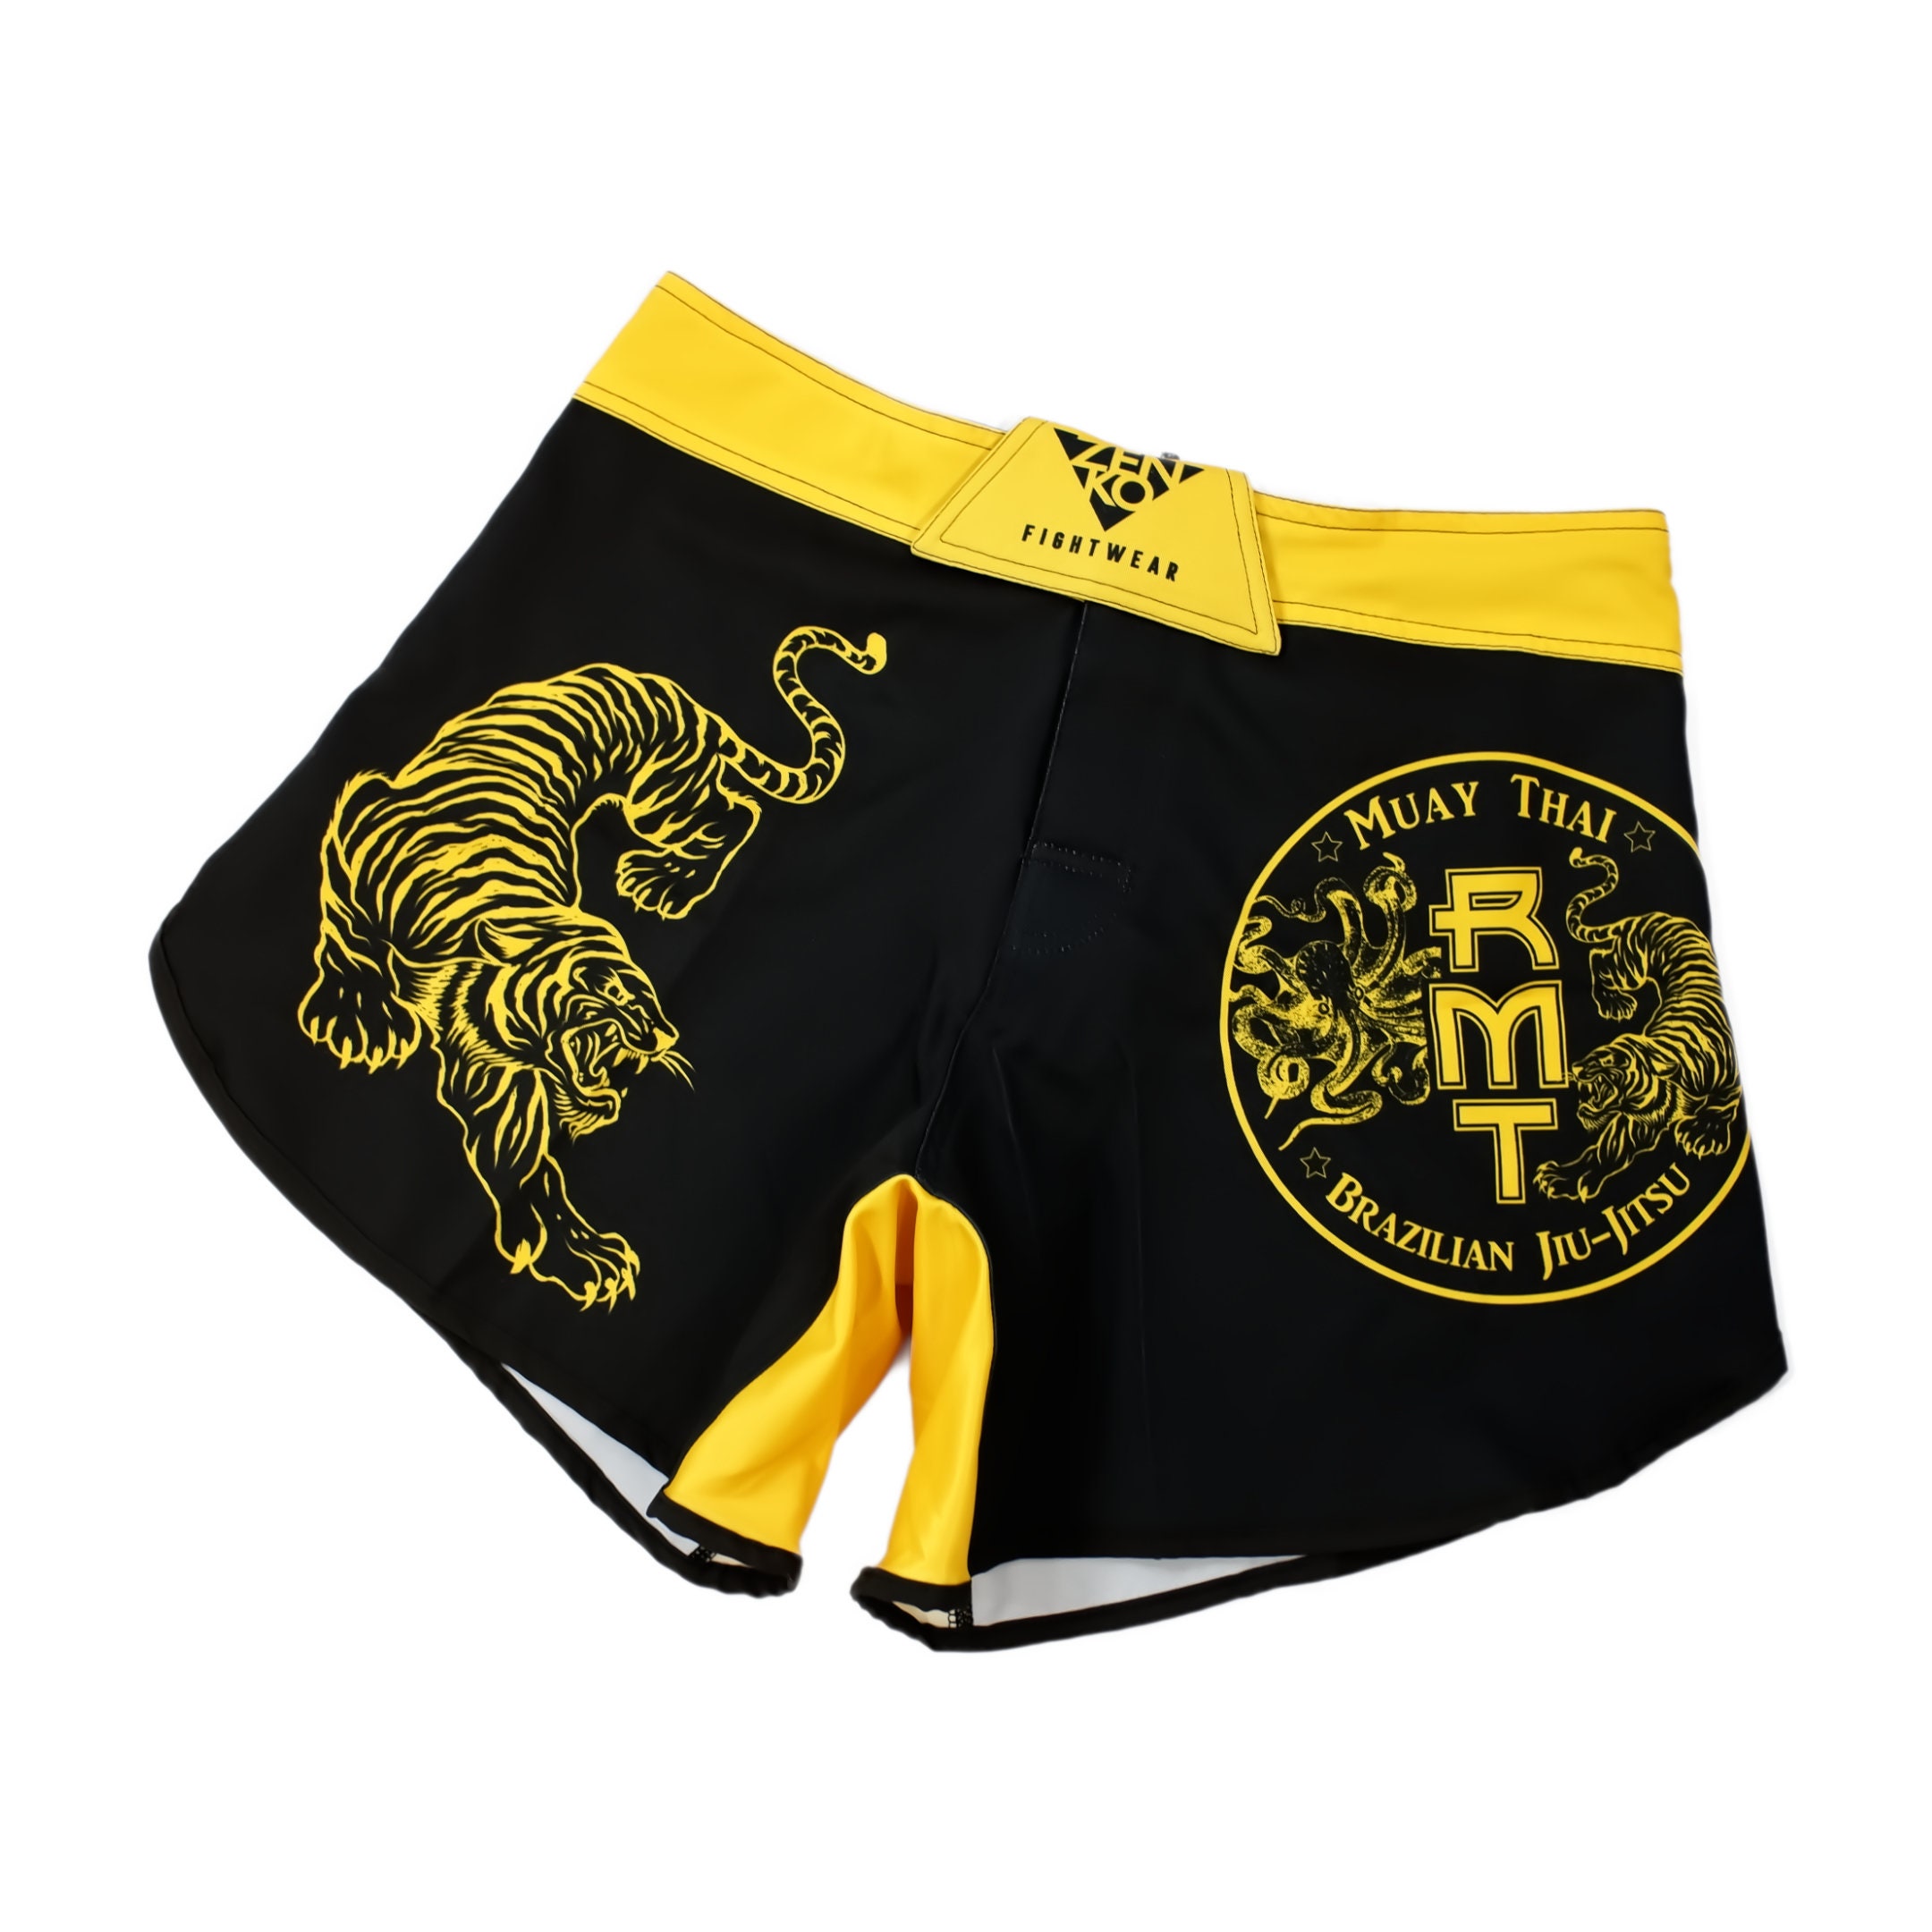 USA Flag Boxing Shorts, Professional Boxing Shorts, USA Boxing Training  Shorts, Athletic Fitness, Boxing MMA, Martial Art Grappling Sports 